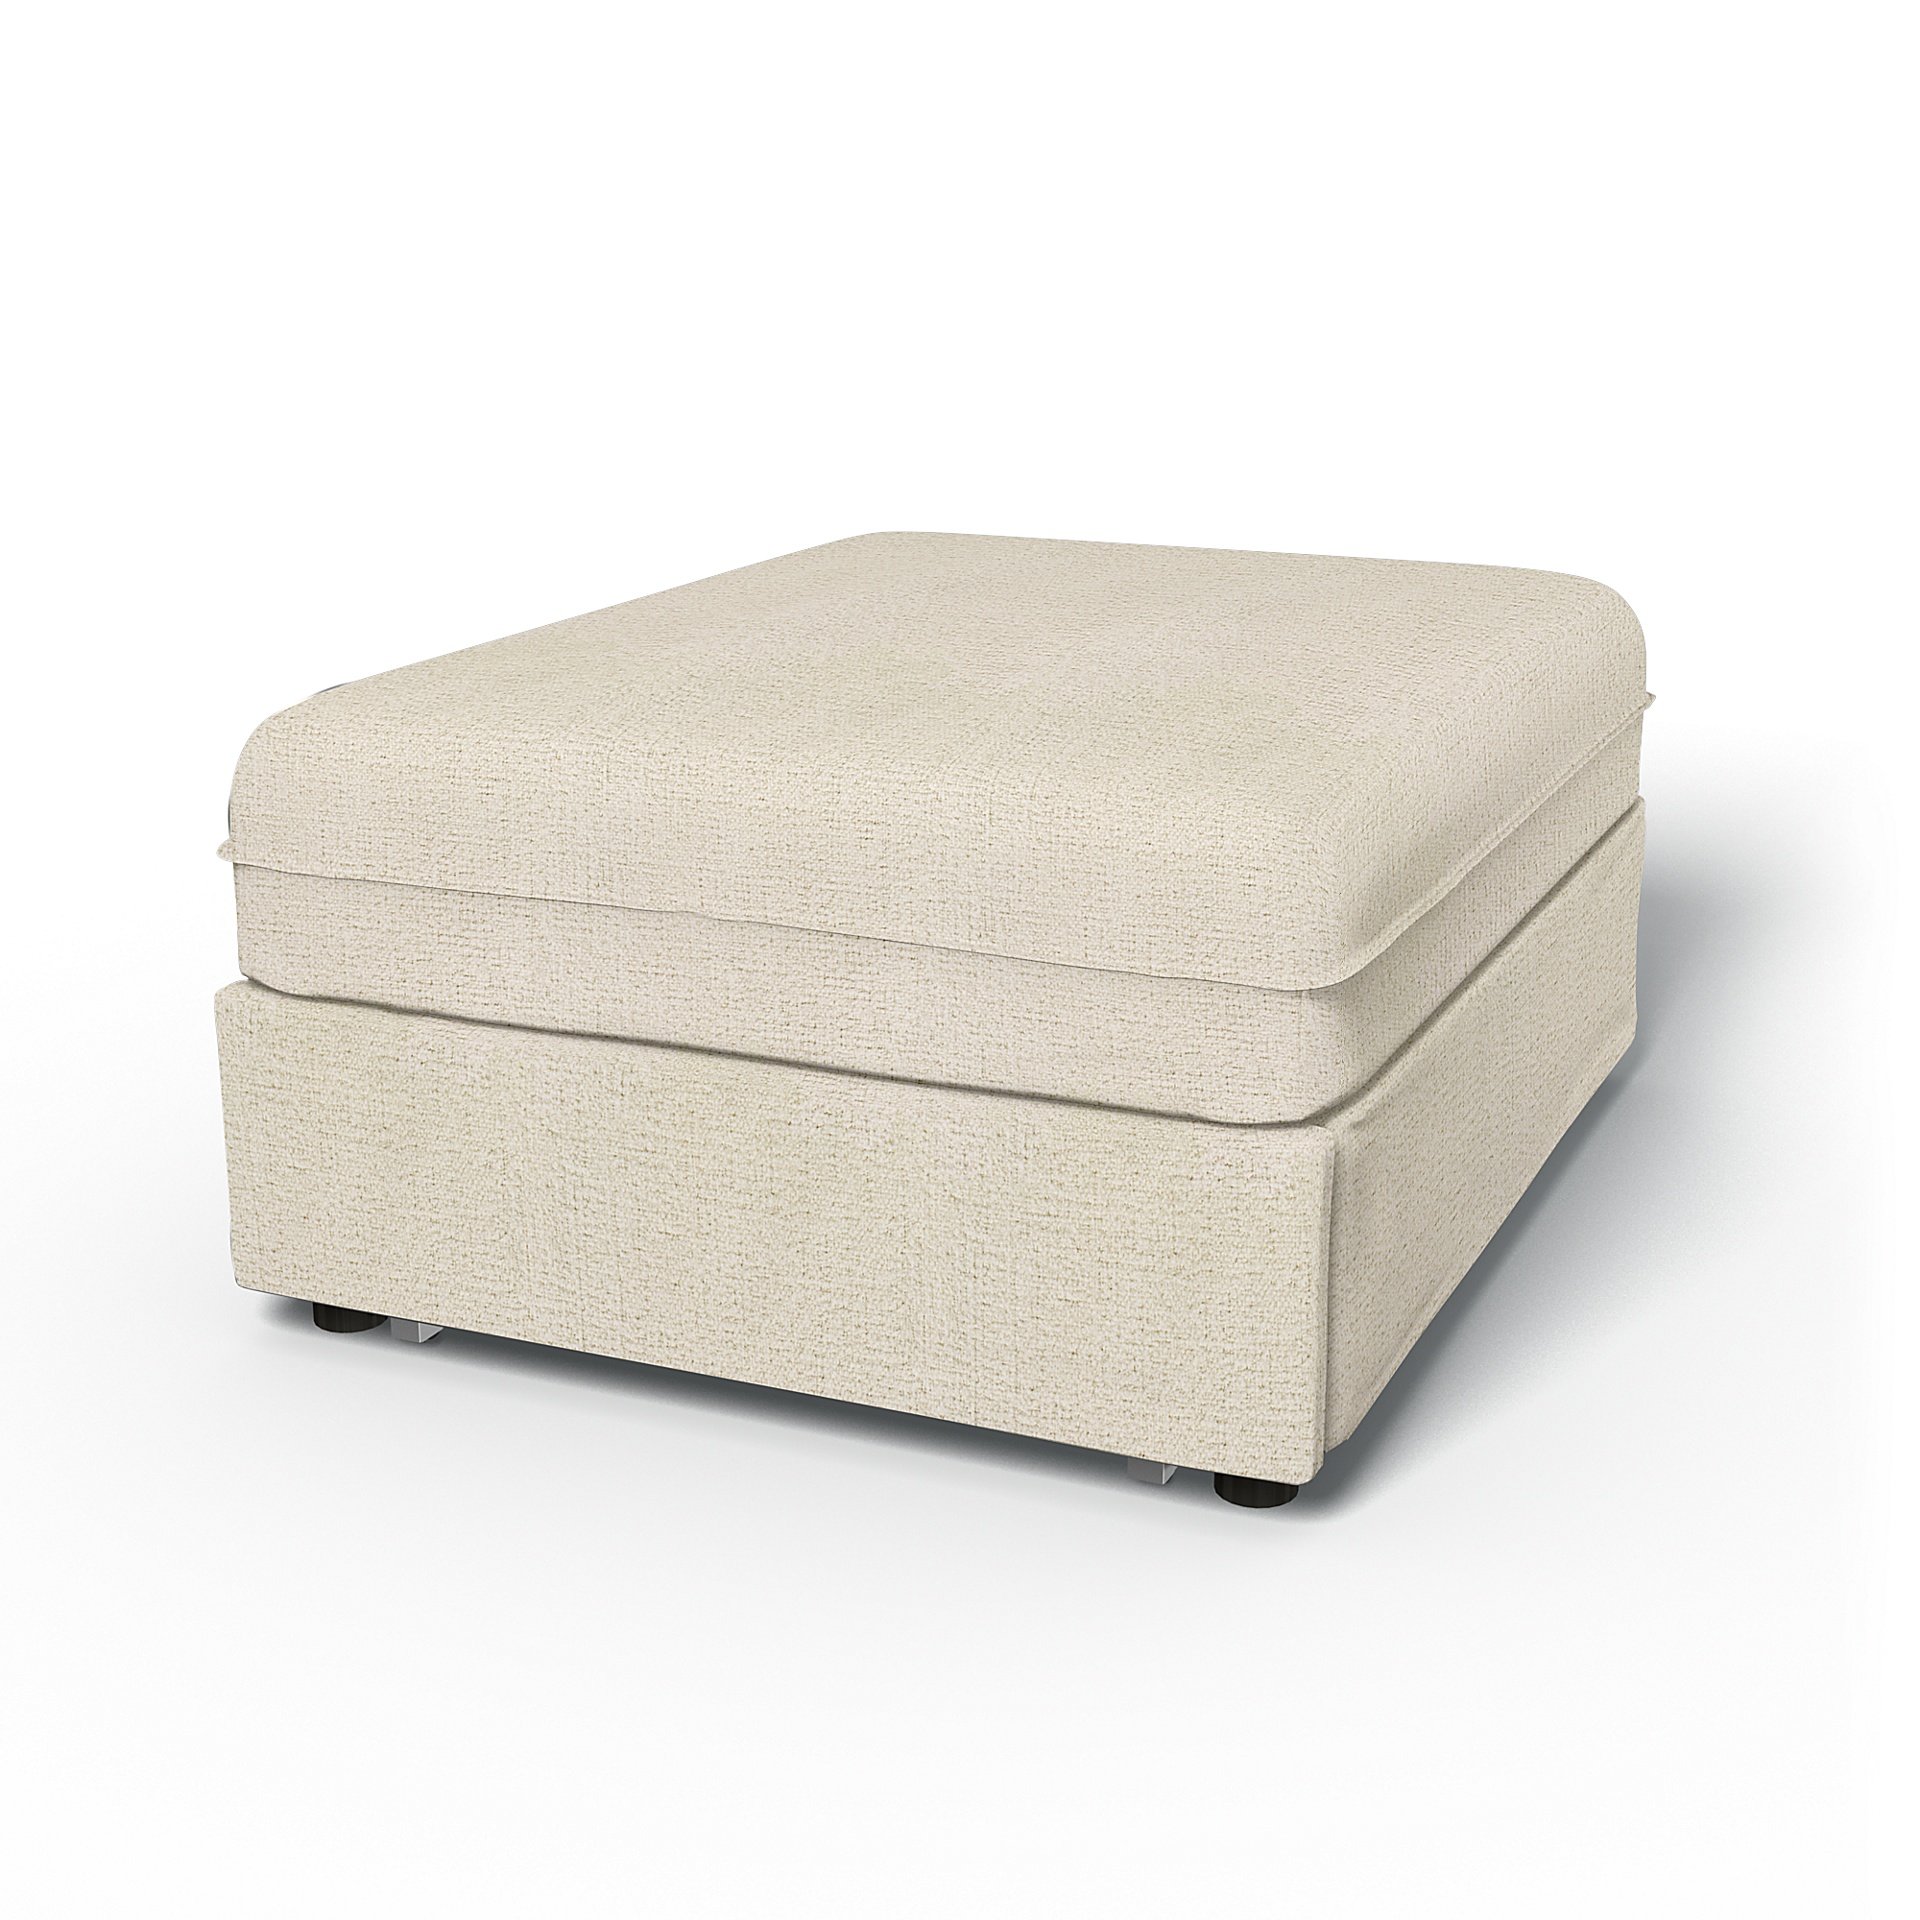 IKEA - Vallentuna Seat Module with Sofa Bed Cover 80x100cm 32x39in, Ecru, Boucle & Texture - Bemz